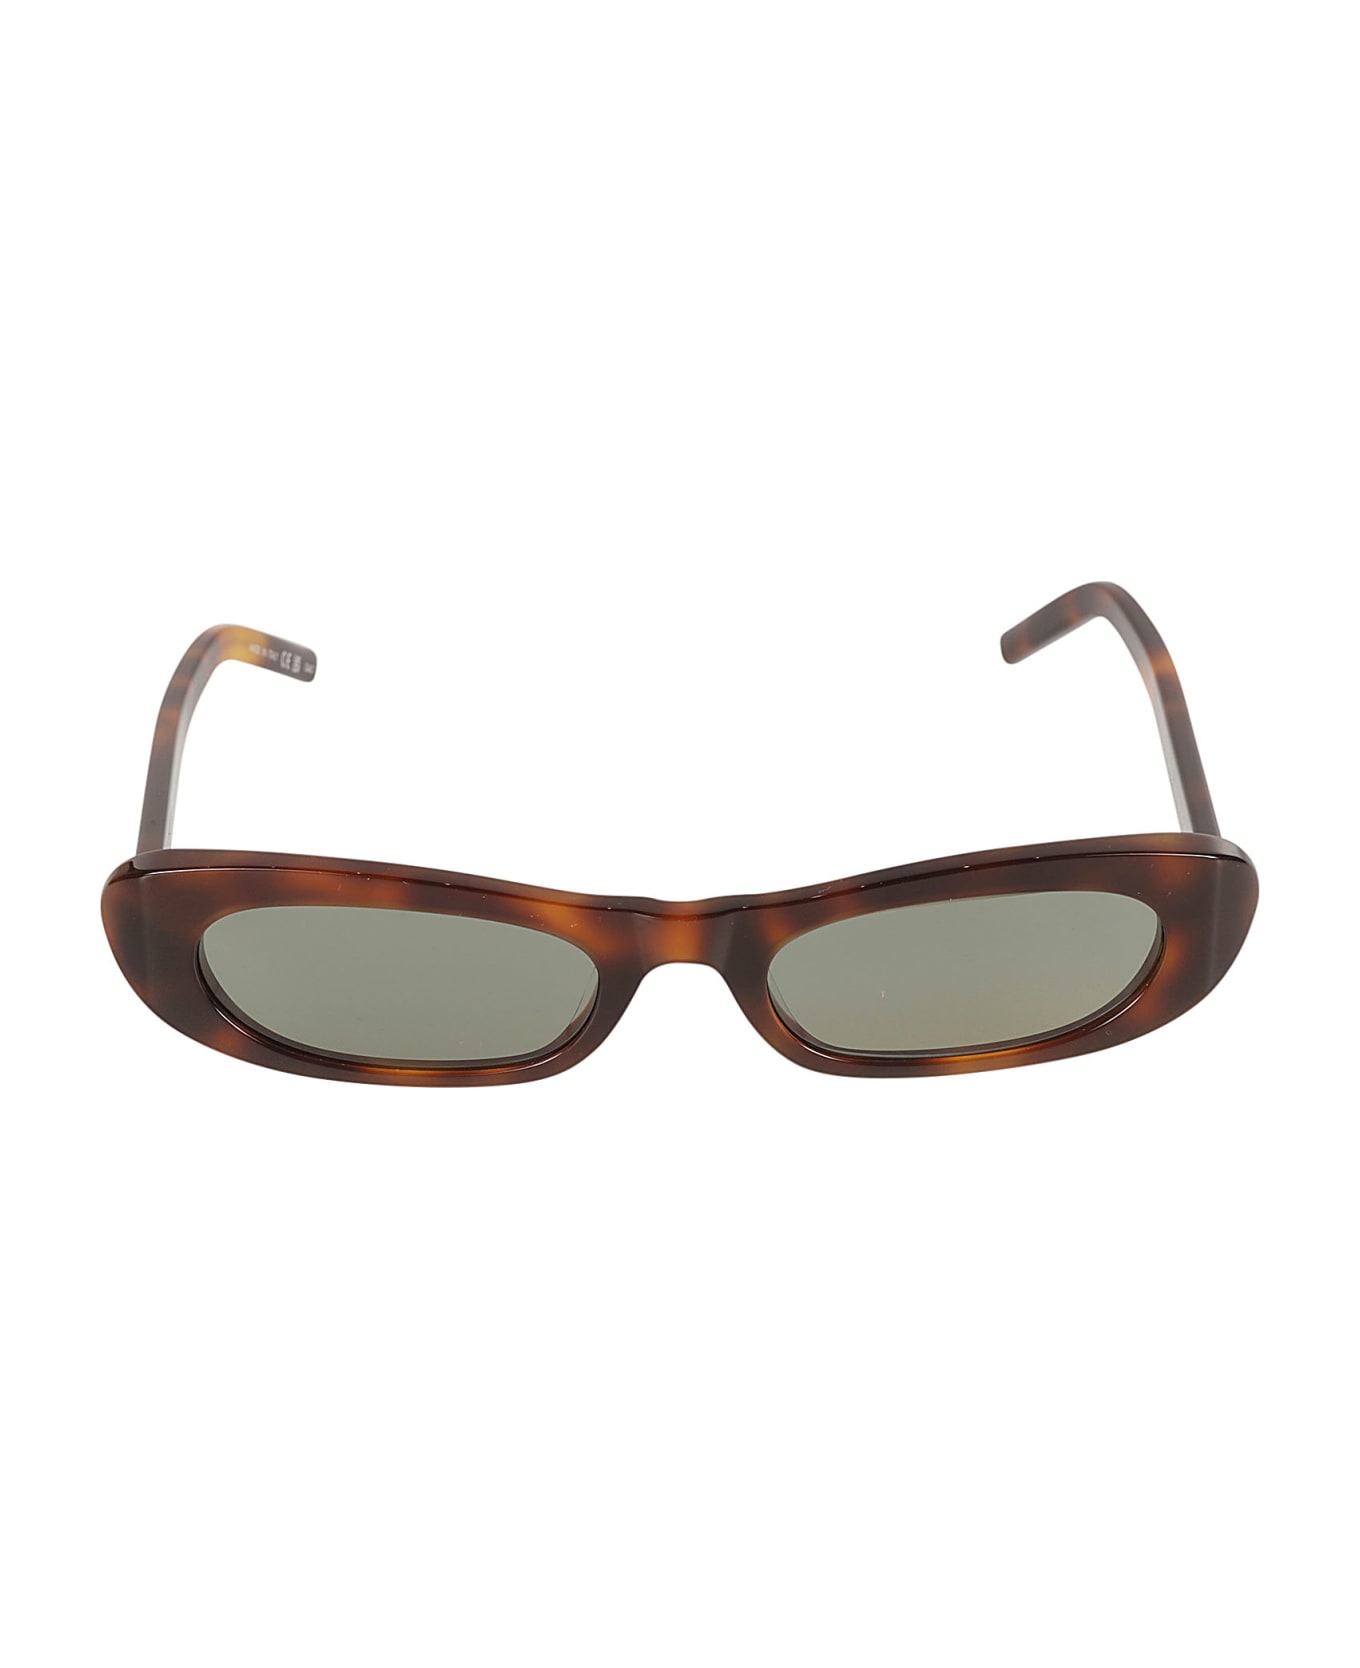 Saint Laurent Eyewear Oval Frame Flame Effect Sunglasses - Havana/Green サングラス